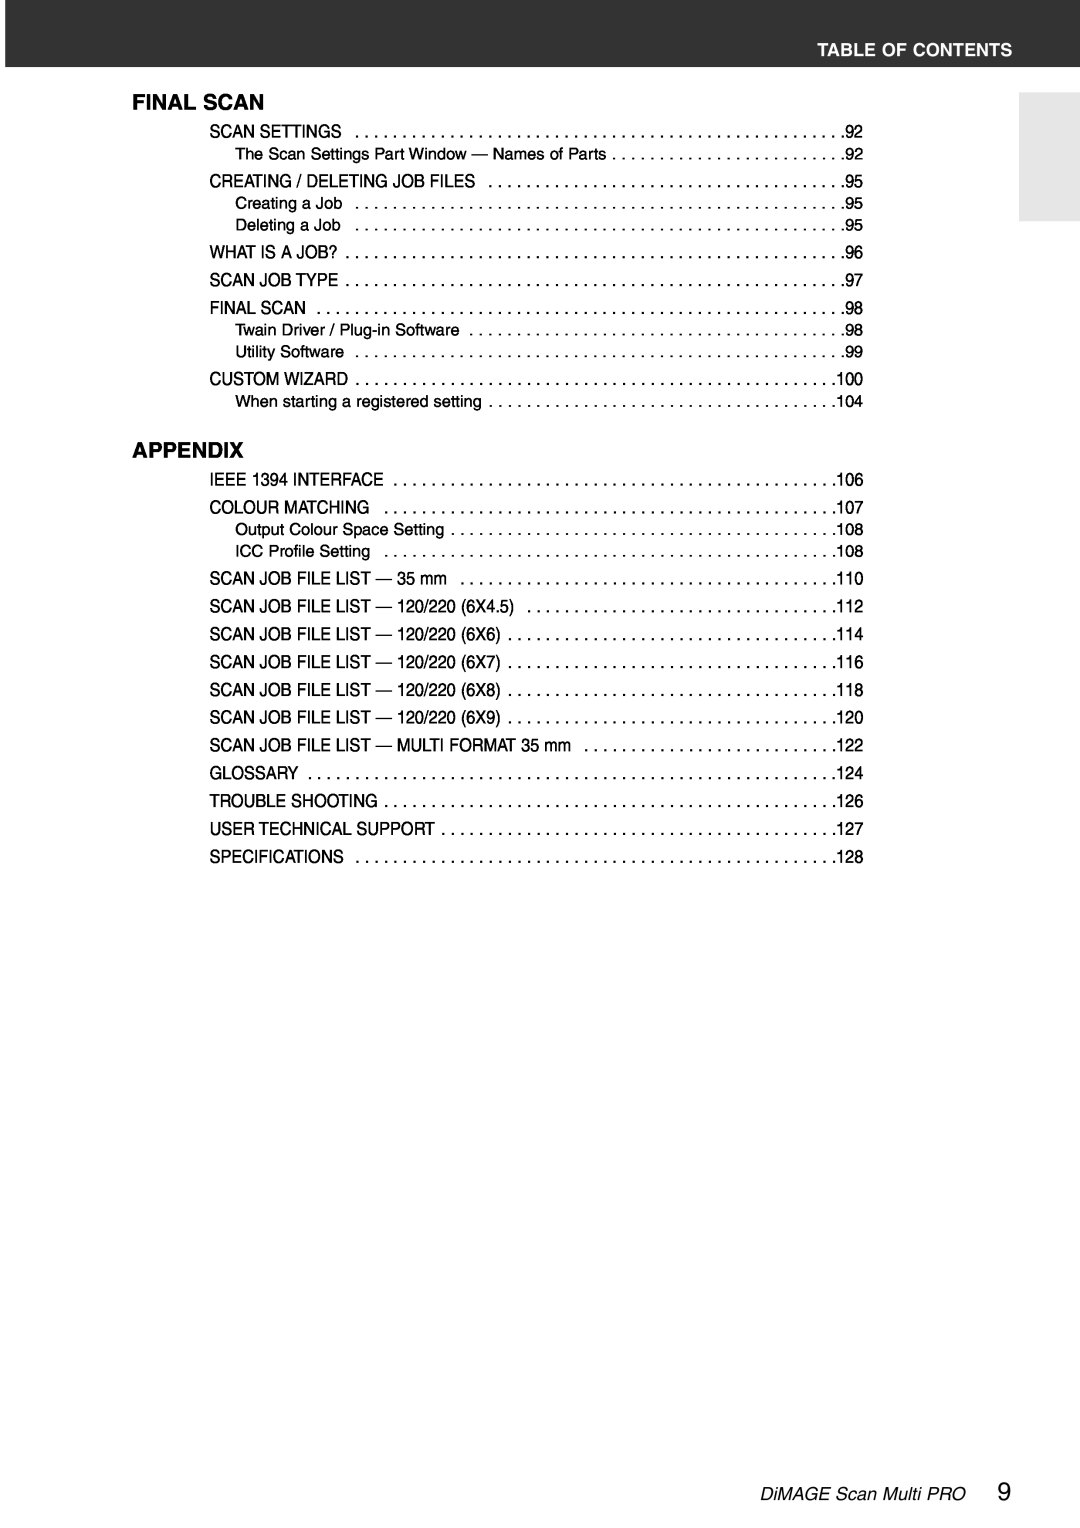 Konica Minolta instruction manual Final Scan, Appendix, Table Of Contents, DiMAGE Scan Multi PRO 